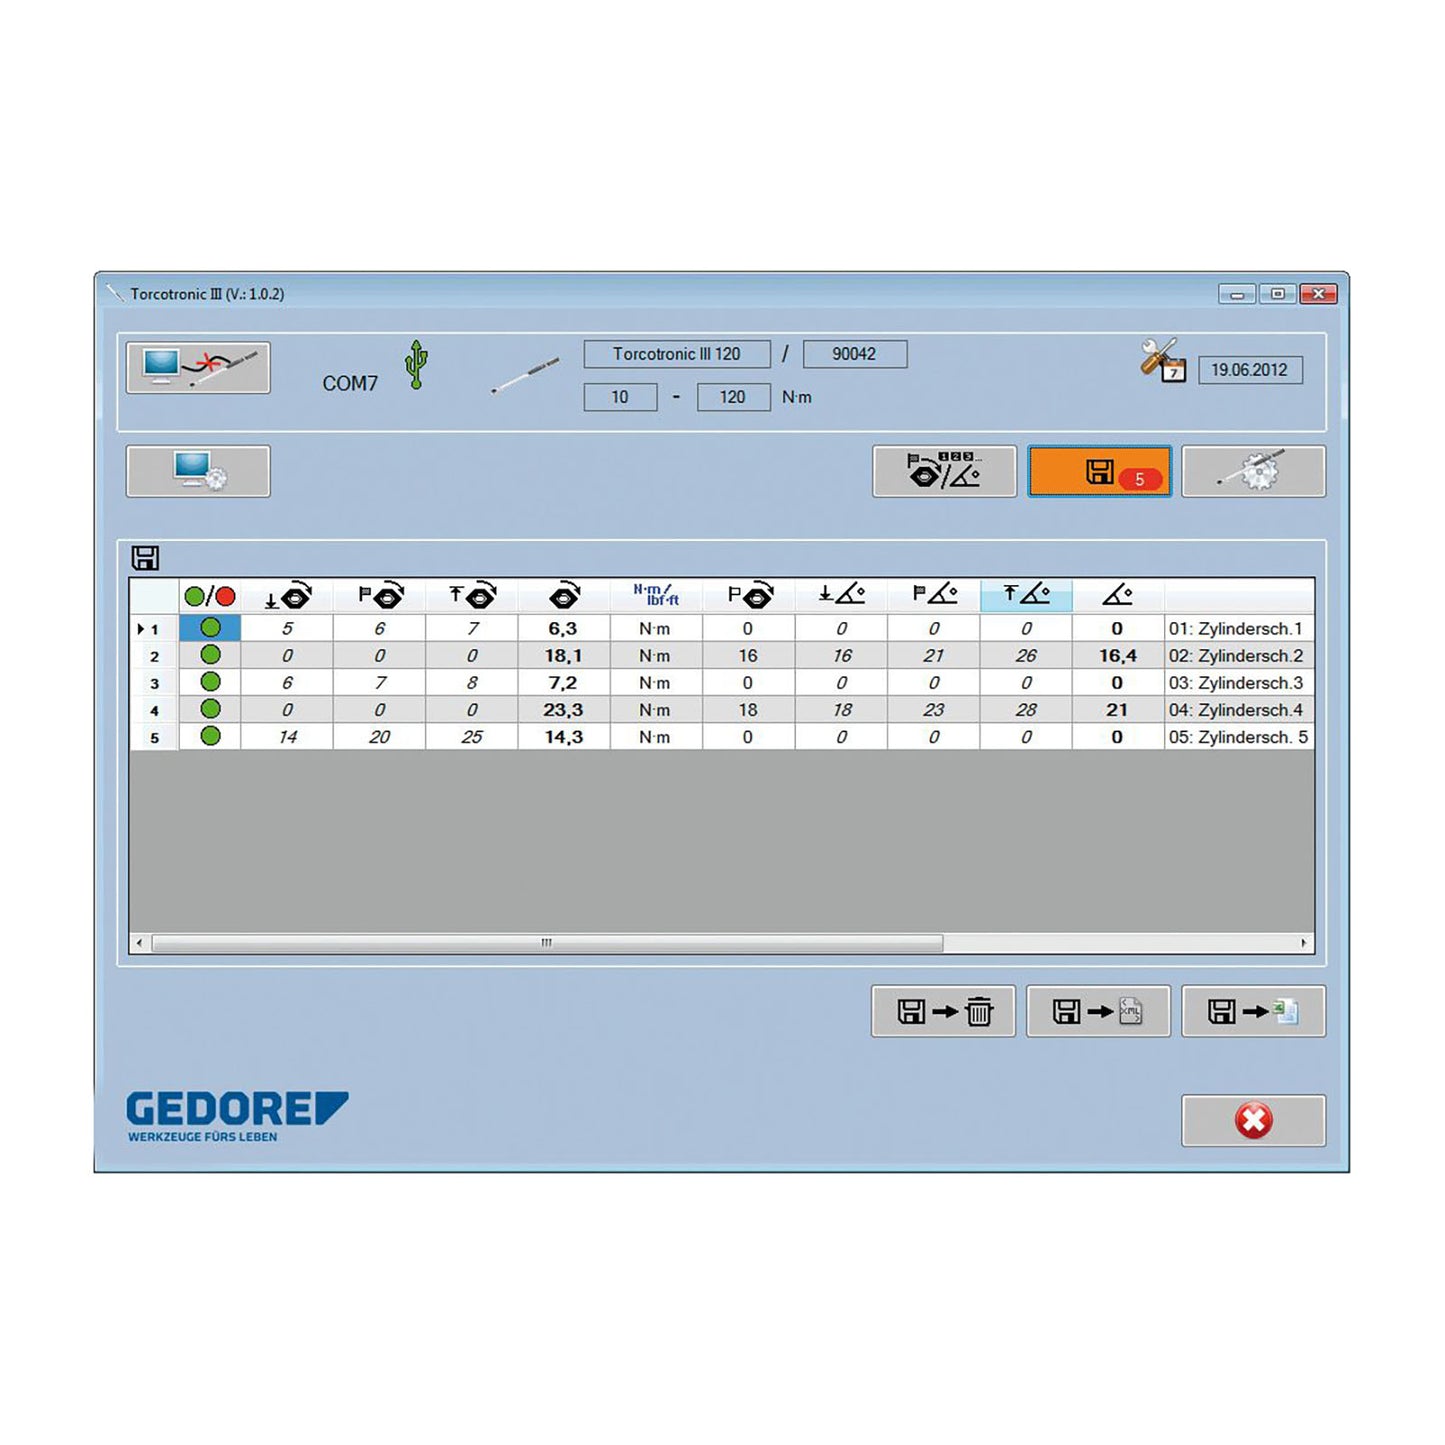 GEDORE TT3KH 350 - Torcotronic III digital dynamometer 70-350 Nm (2648644)